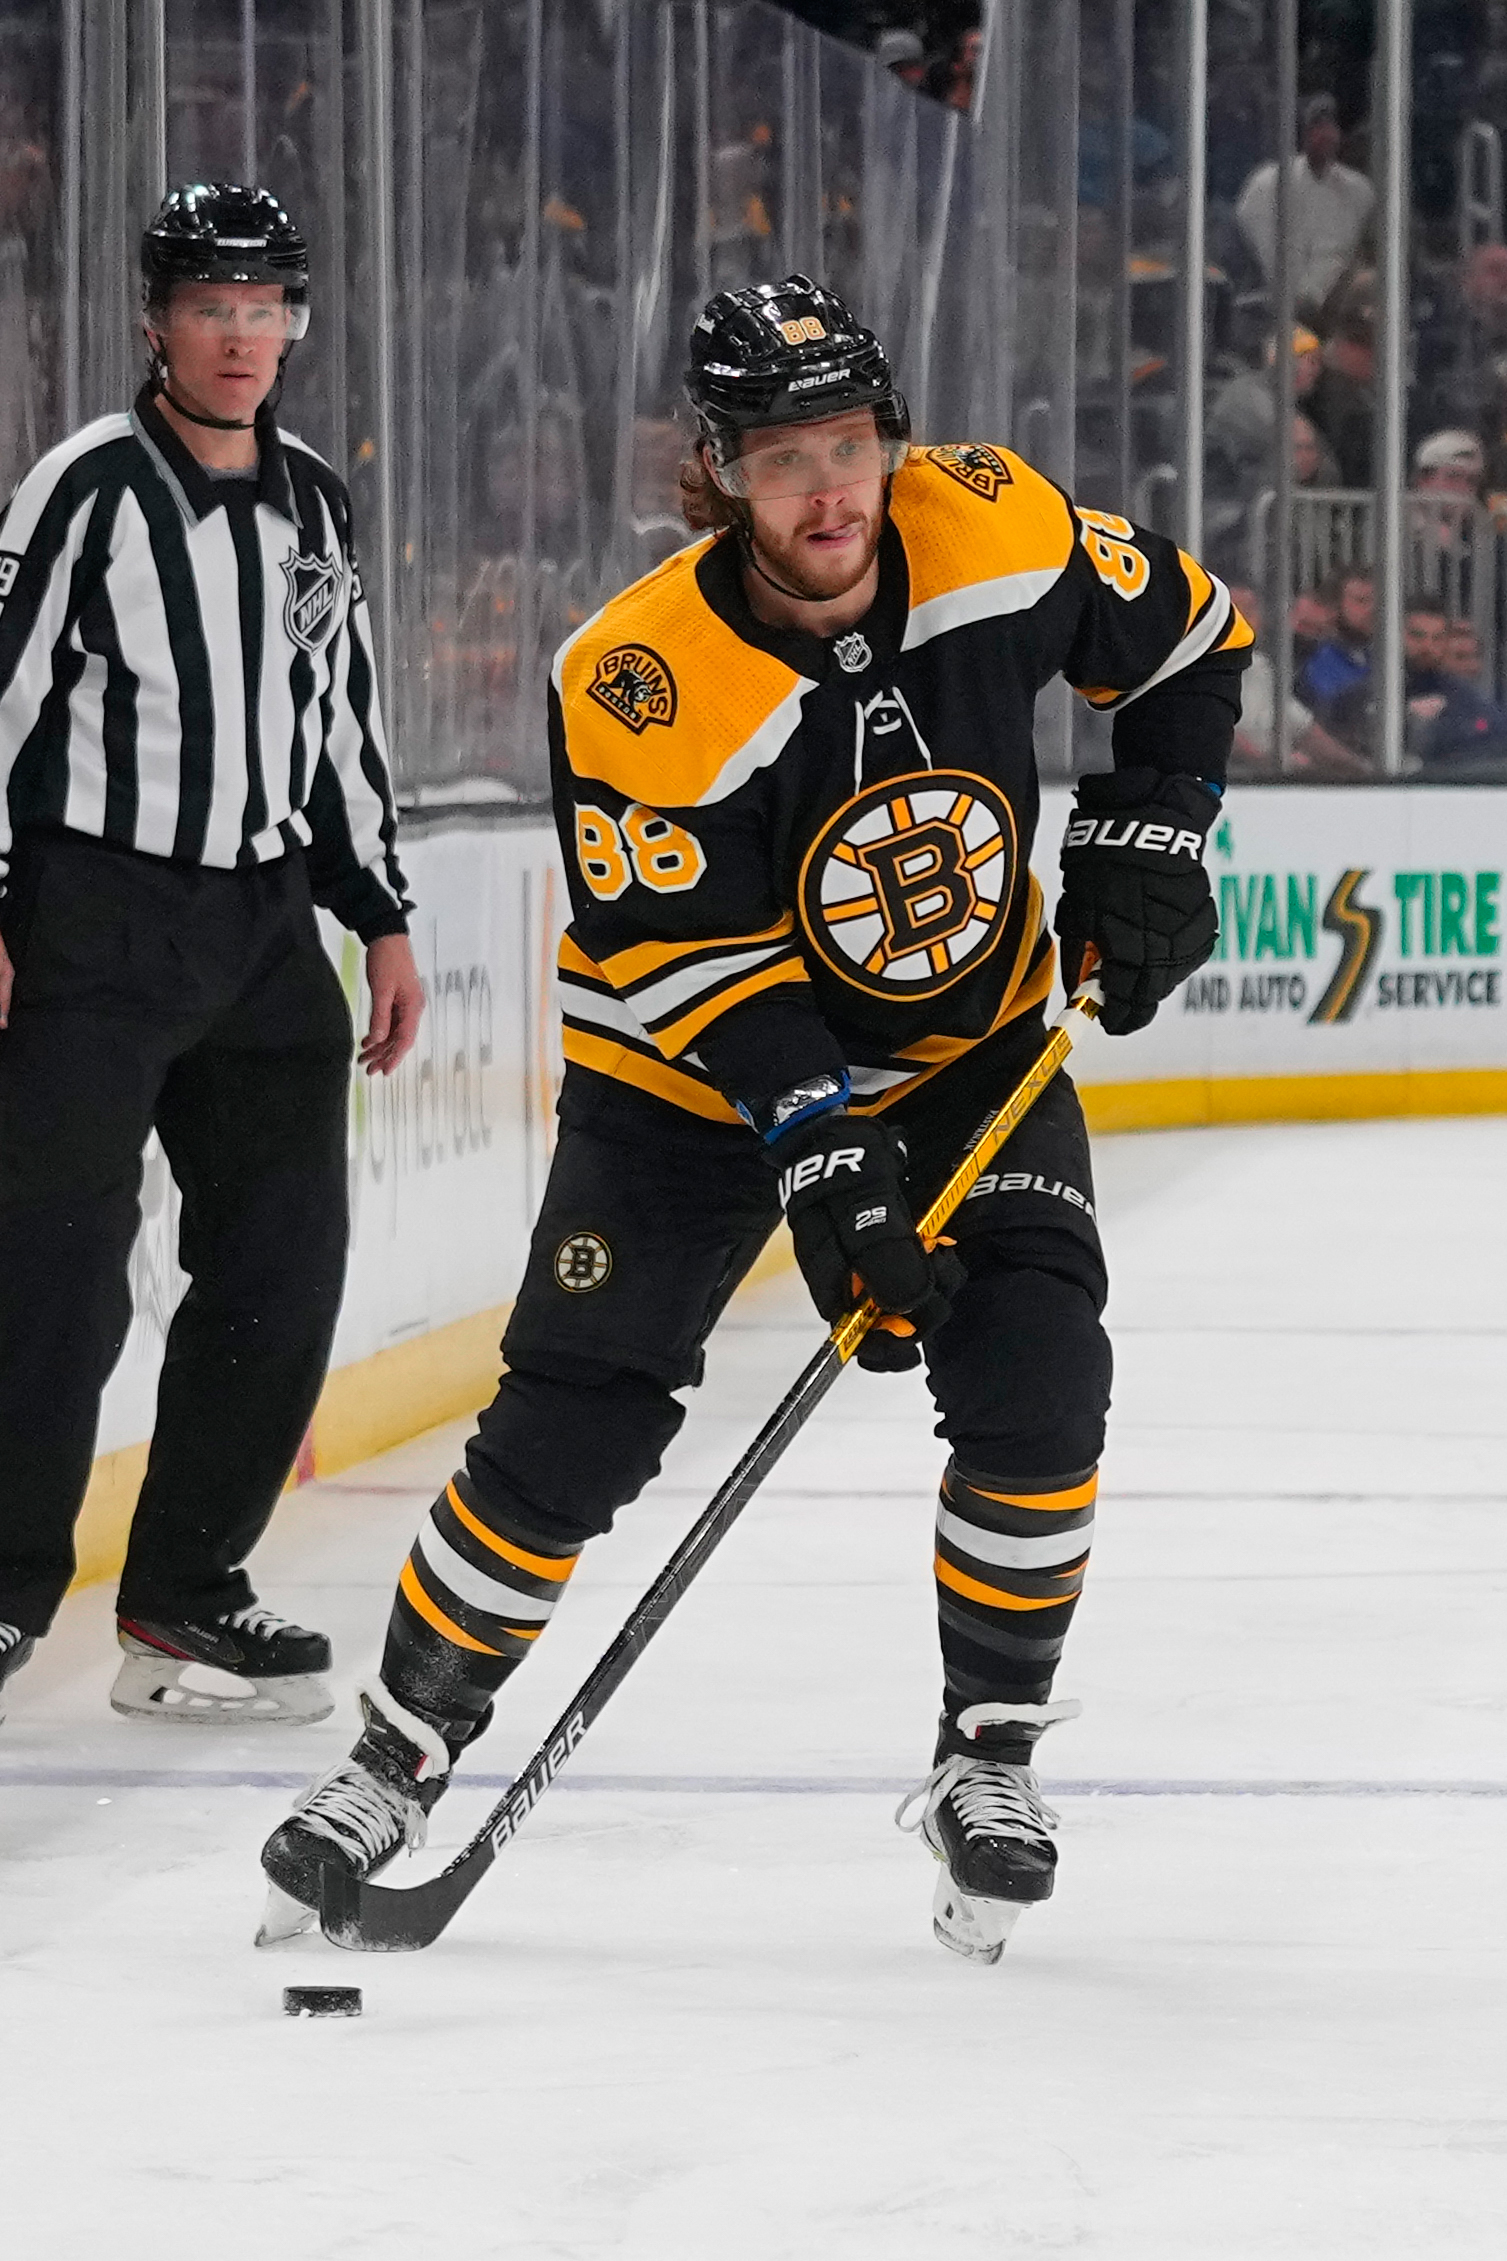 Boston Bruins Goaltending Poses Salary Cap Problems